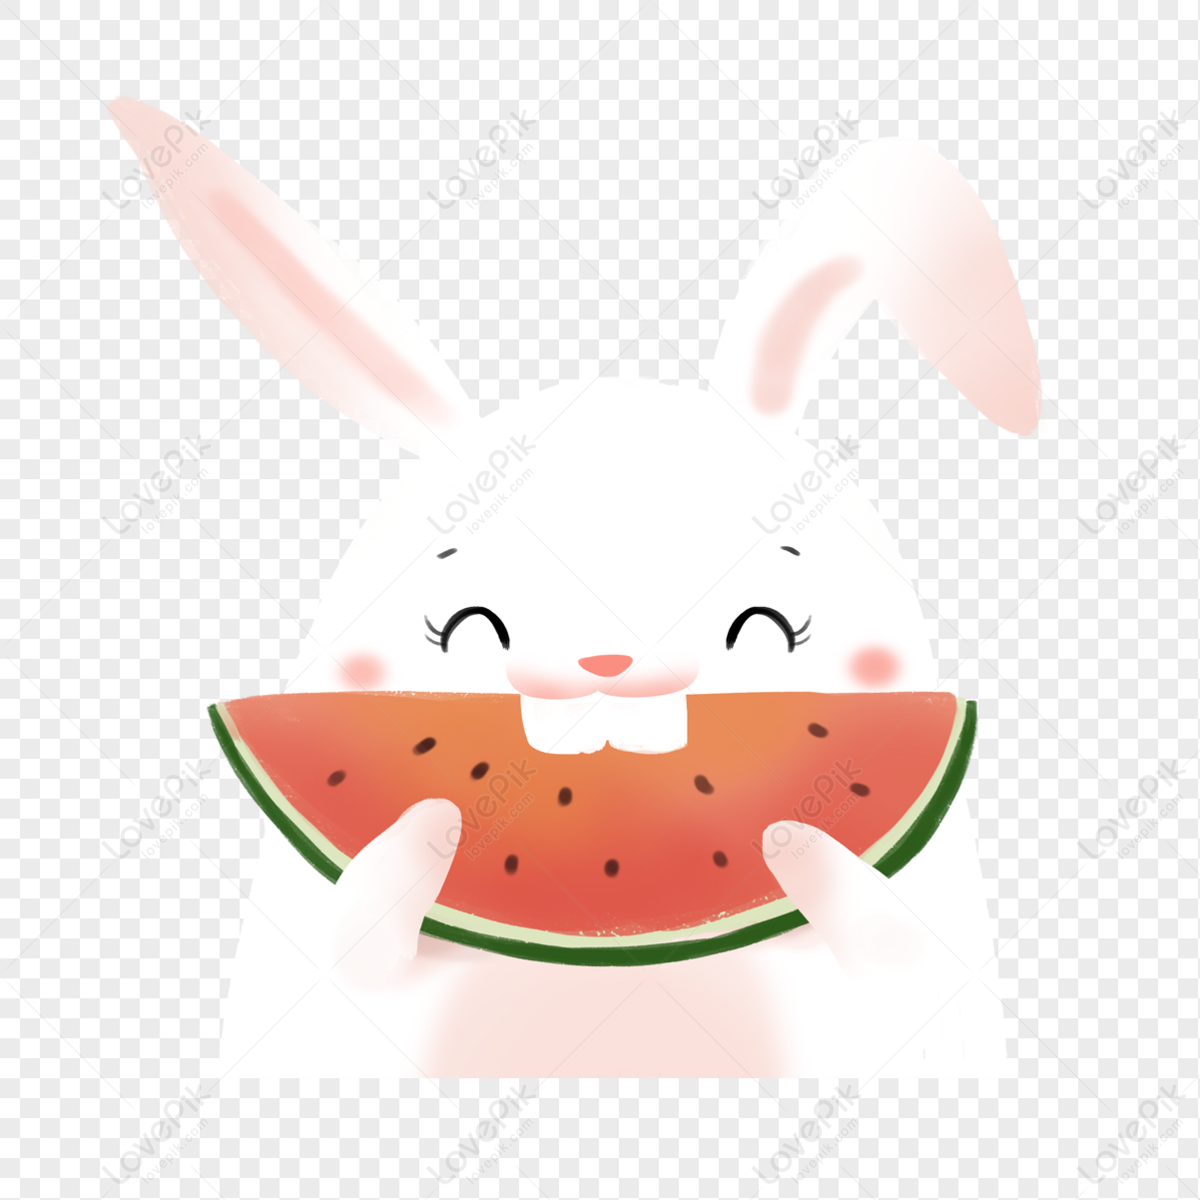 can bunnies eat watermelon